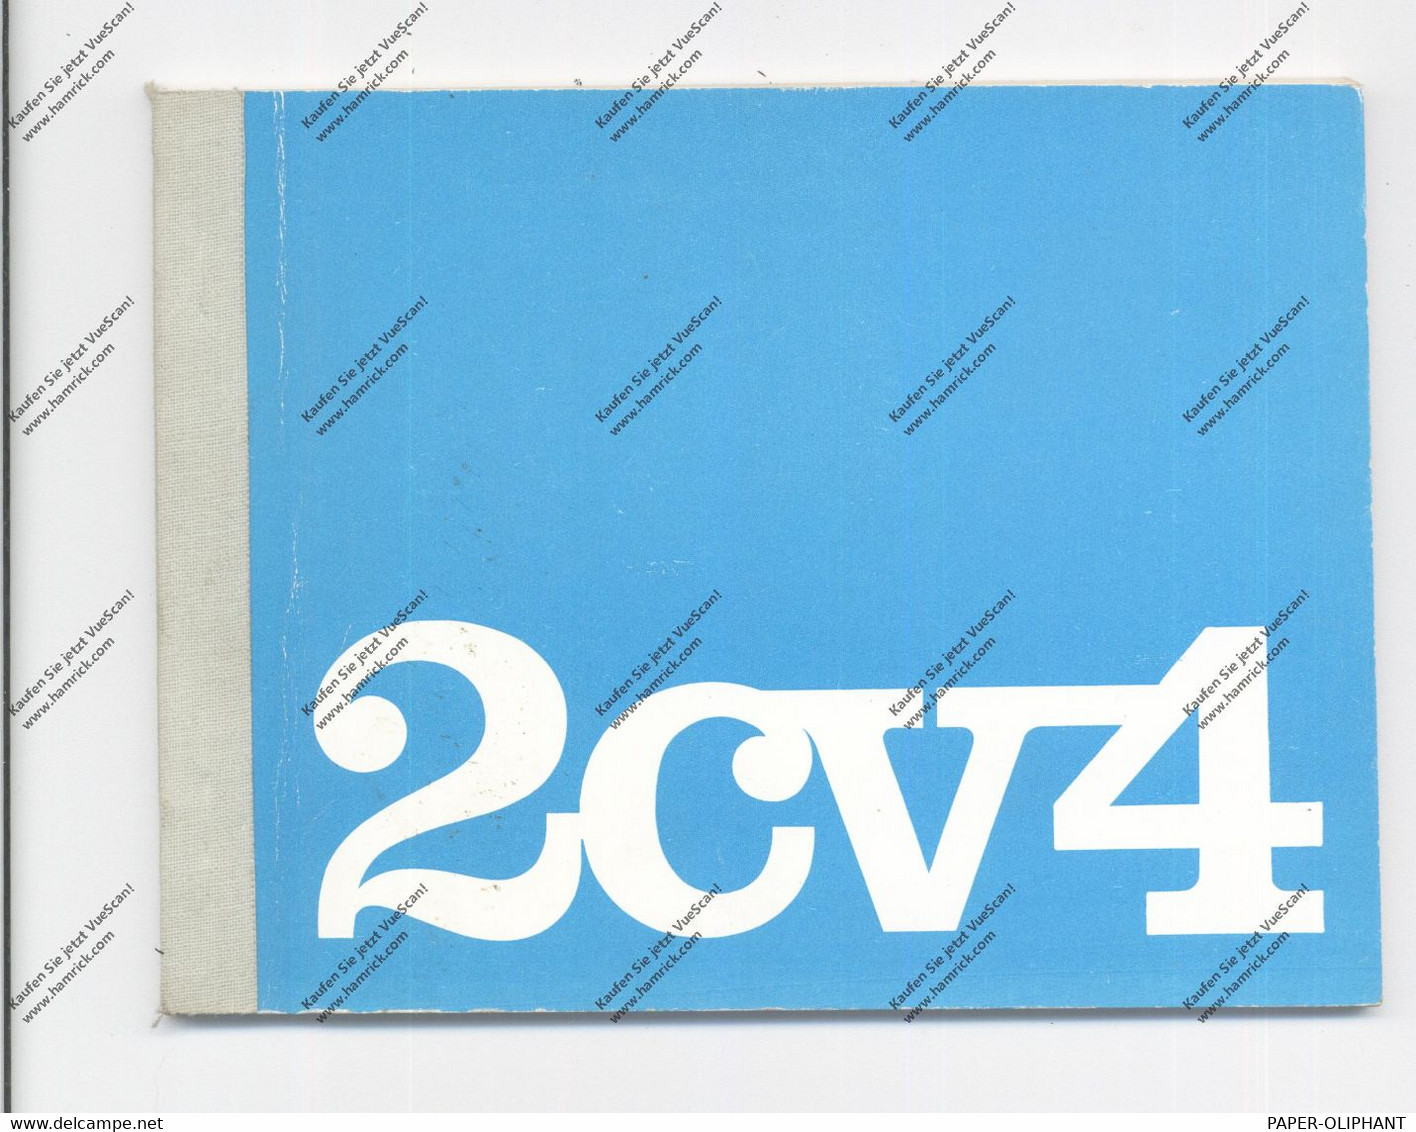 AUTOMOBIL - CITROEN 2CV4 Handbuch, 53 Seiten, Sehr Gute Erhaltung - Reparaturanleitungen